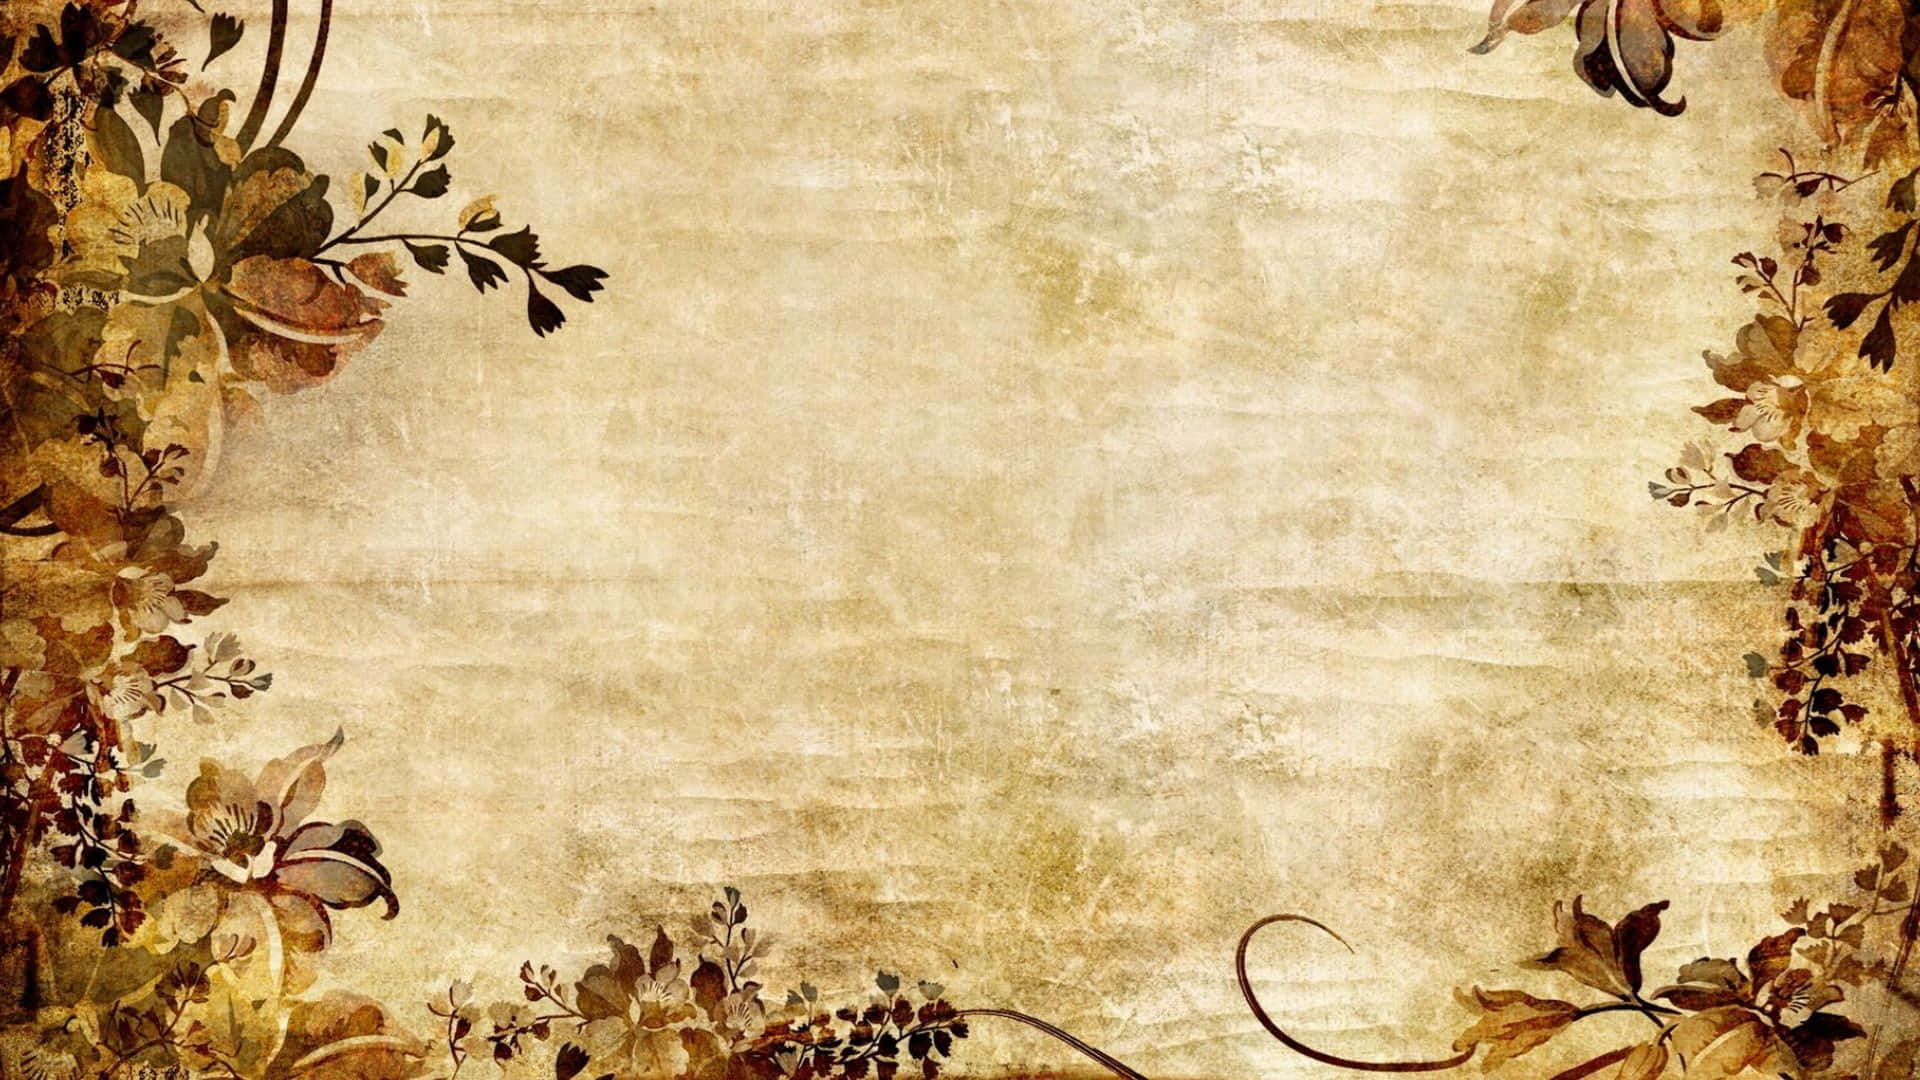 A Beautiful Arrangement of Dried Flowers on Wooden Surface Wallpaper